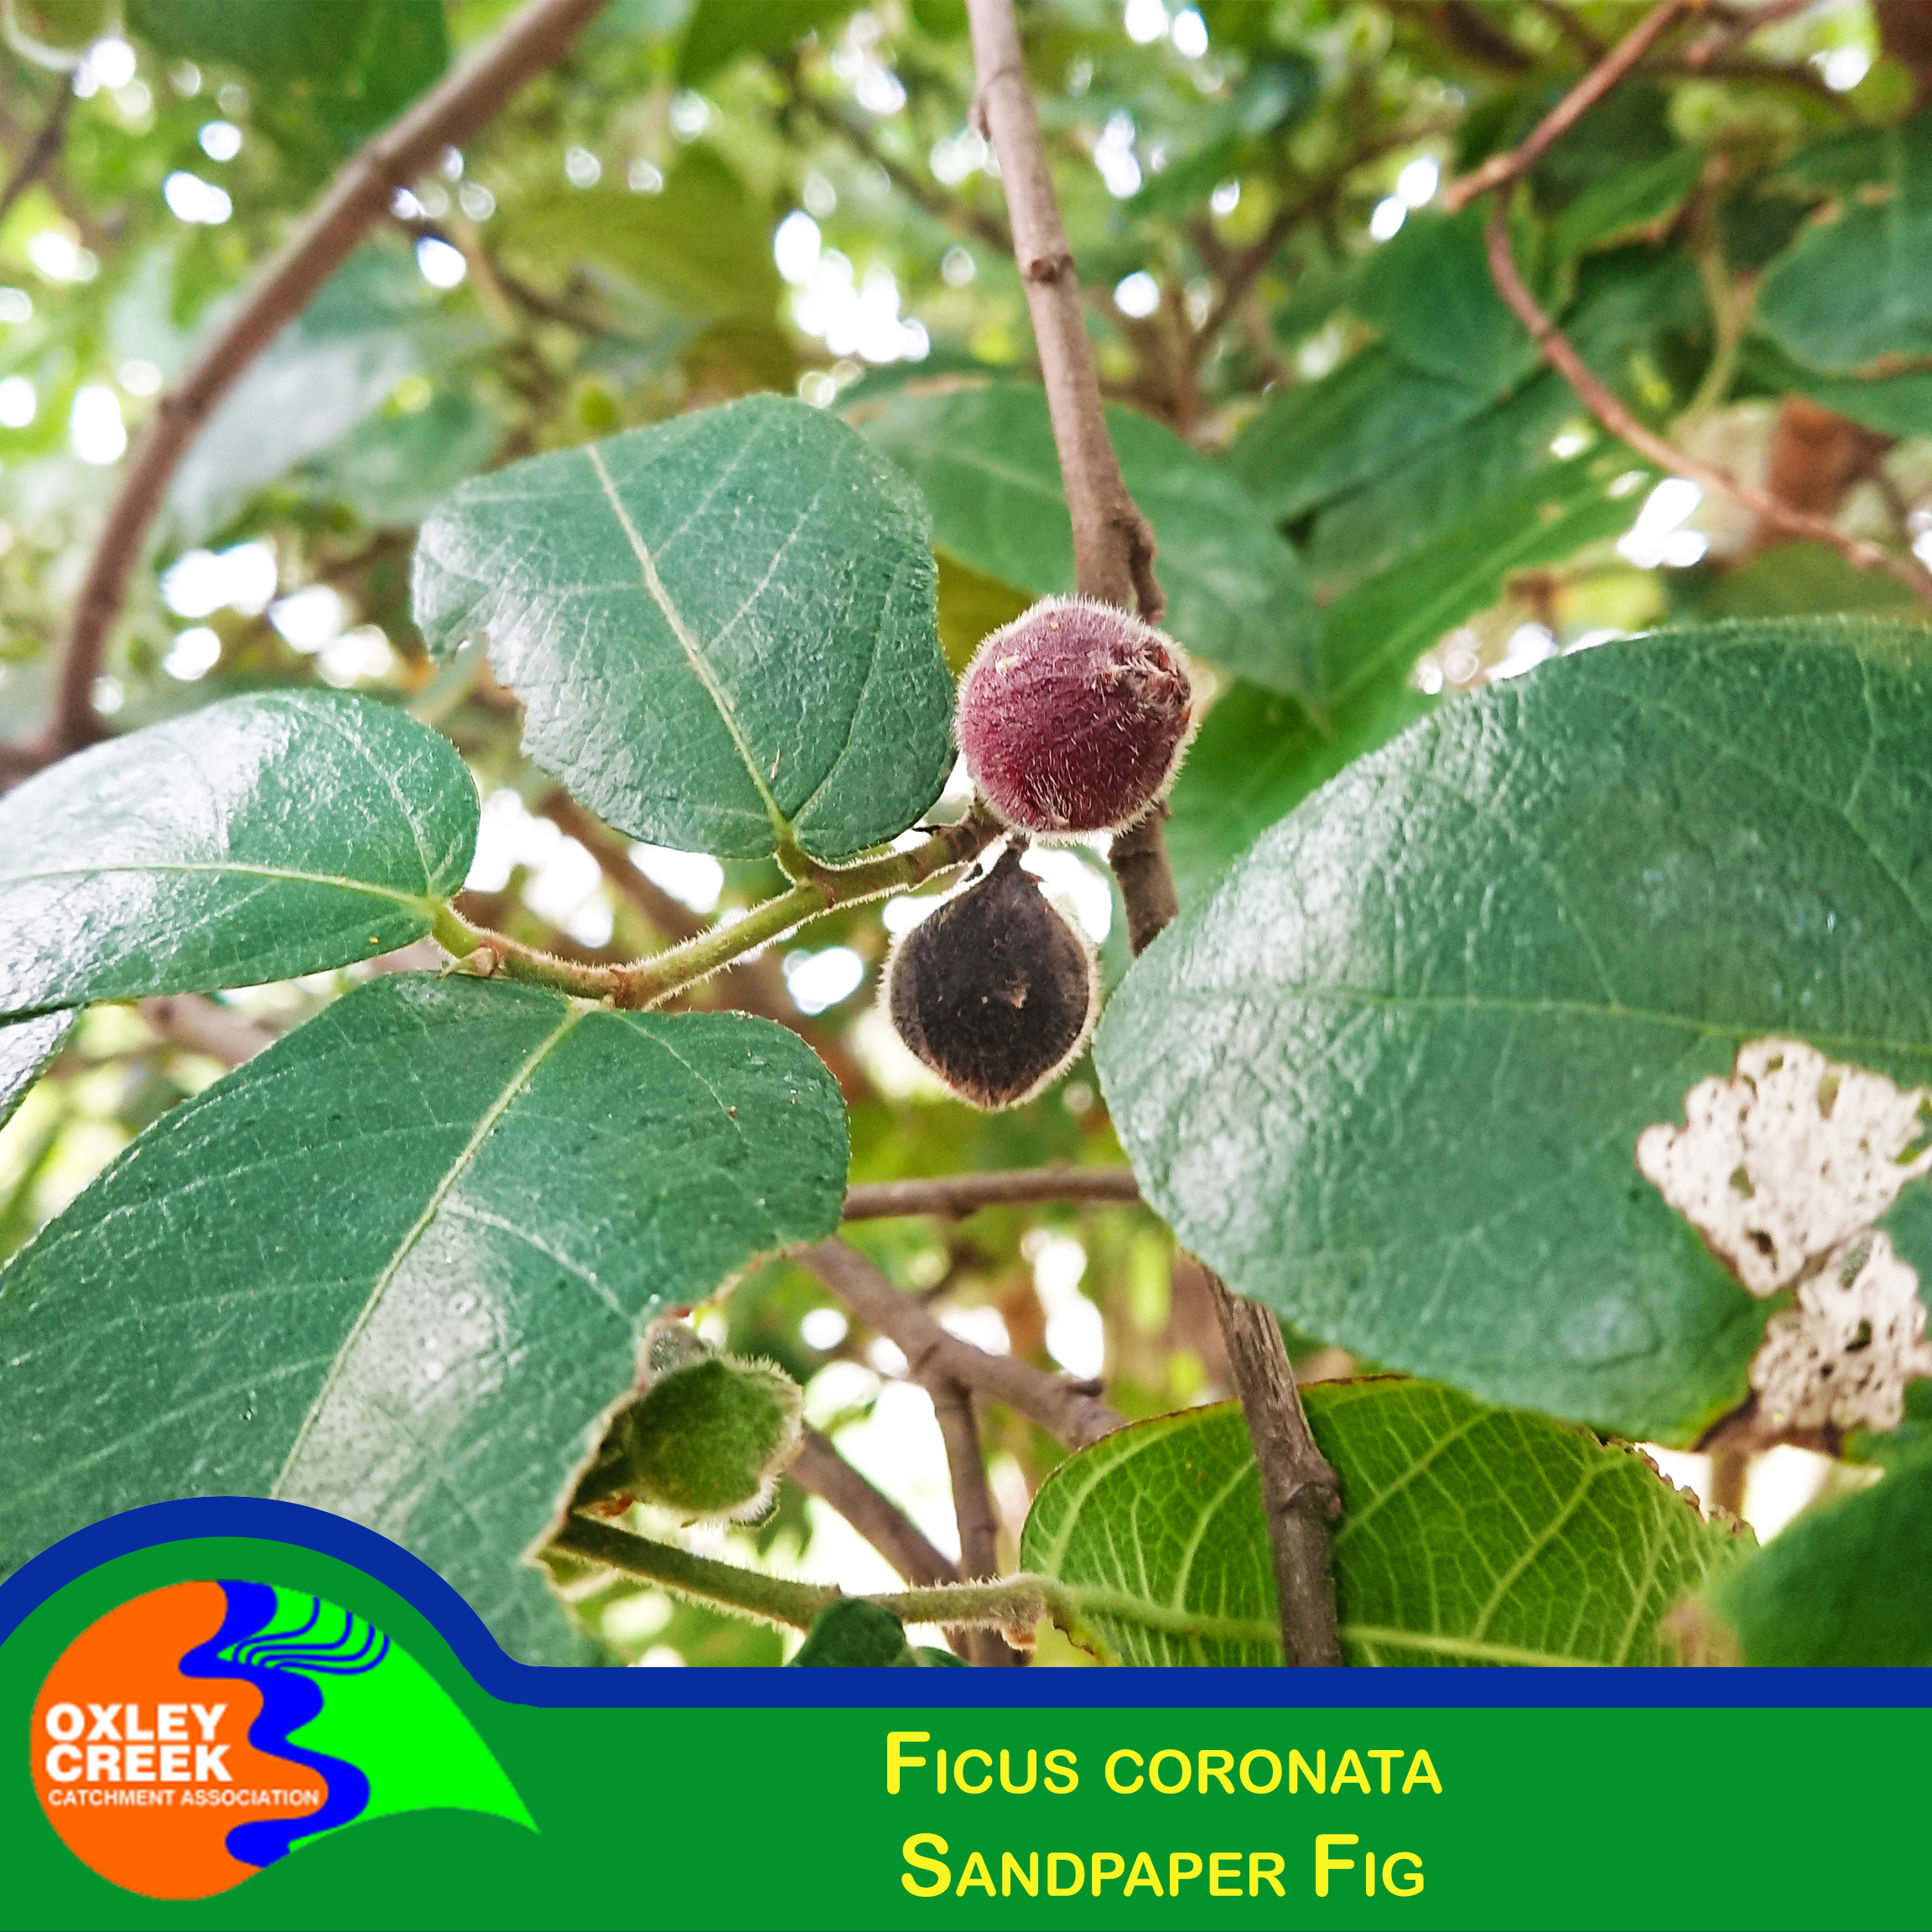 kort legemliggøre Afdæk Sandpaper Fig (Ficus coronata) – Oxley Creek Catchment Association